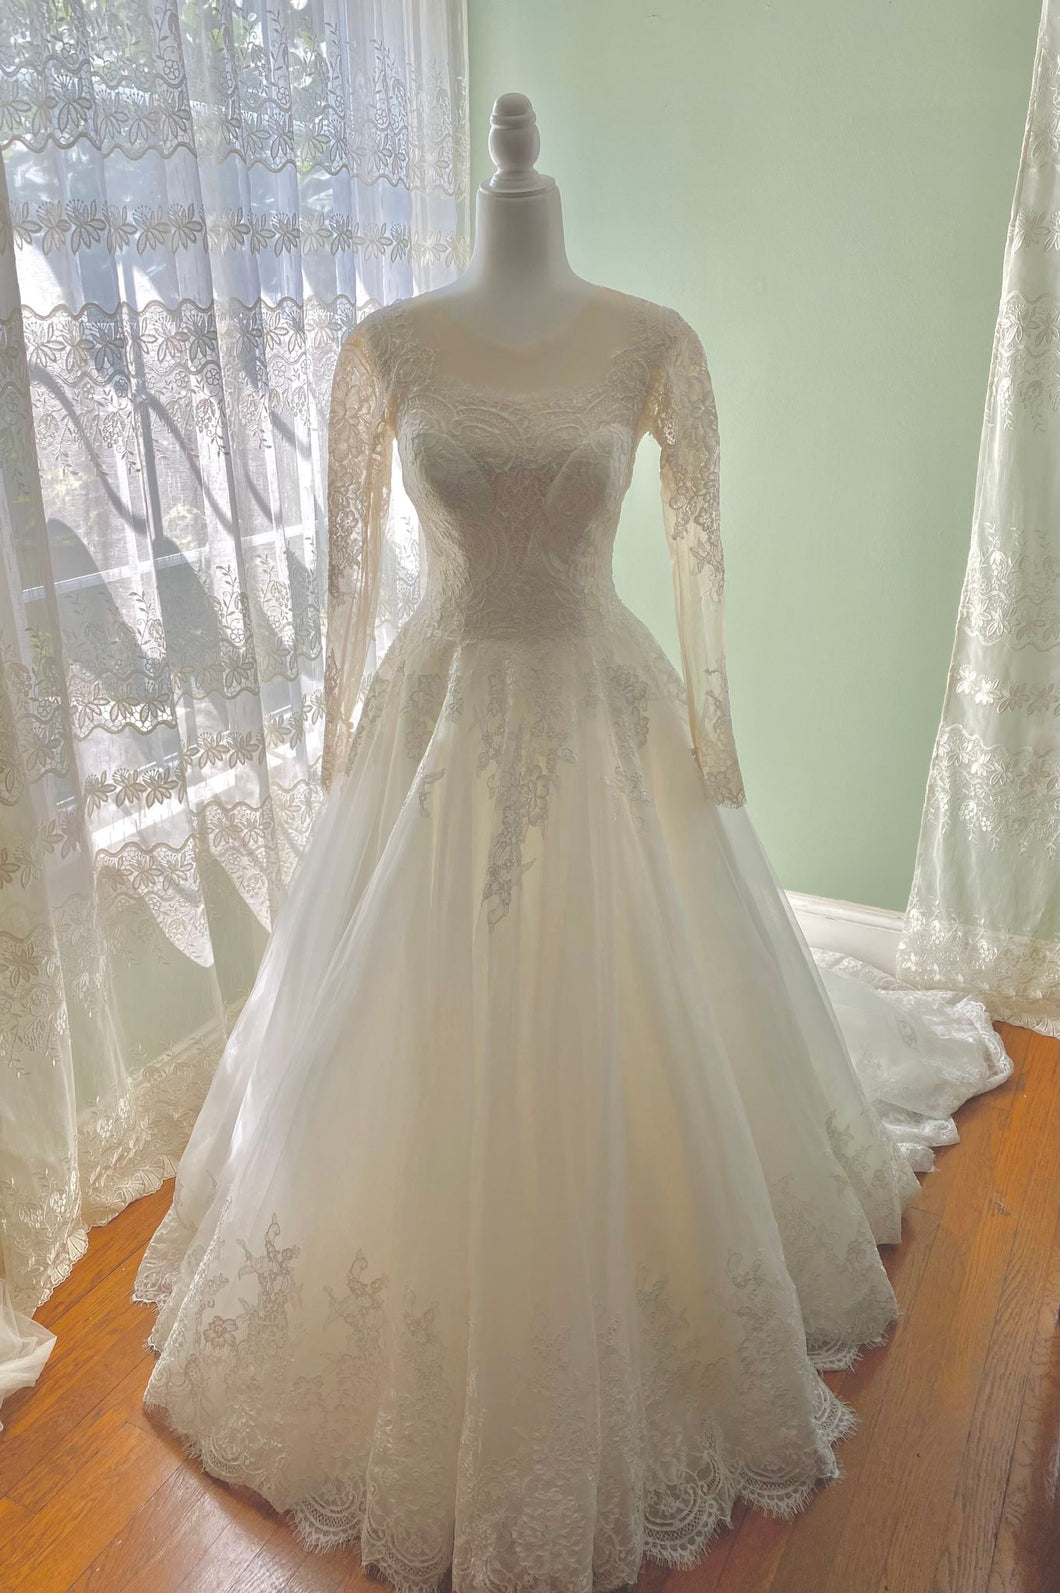 Allure Bridals '9366' wedding dress size-06 NEW